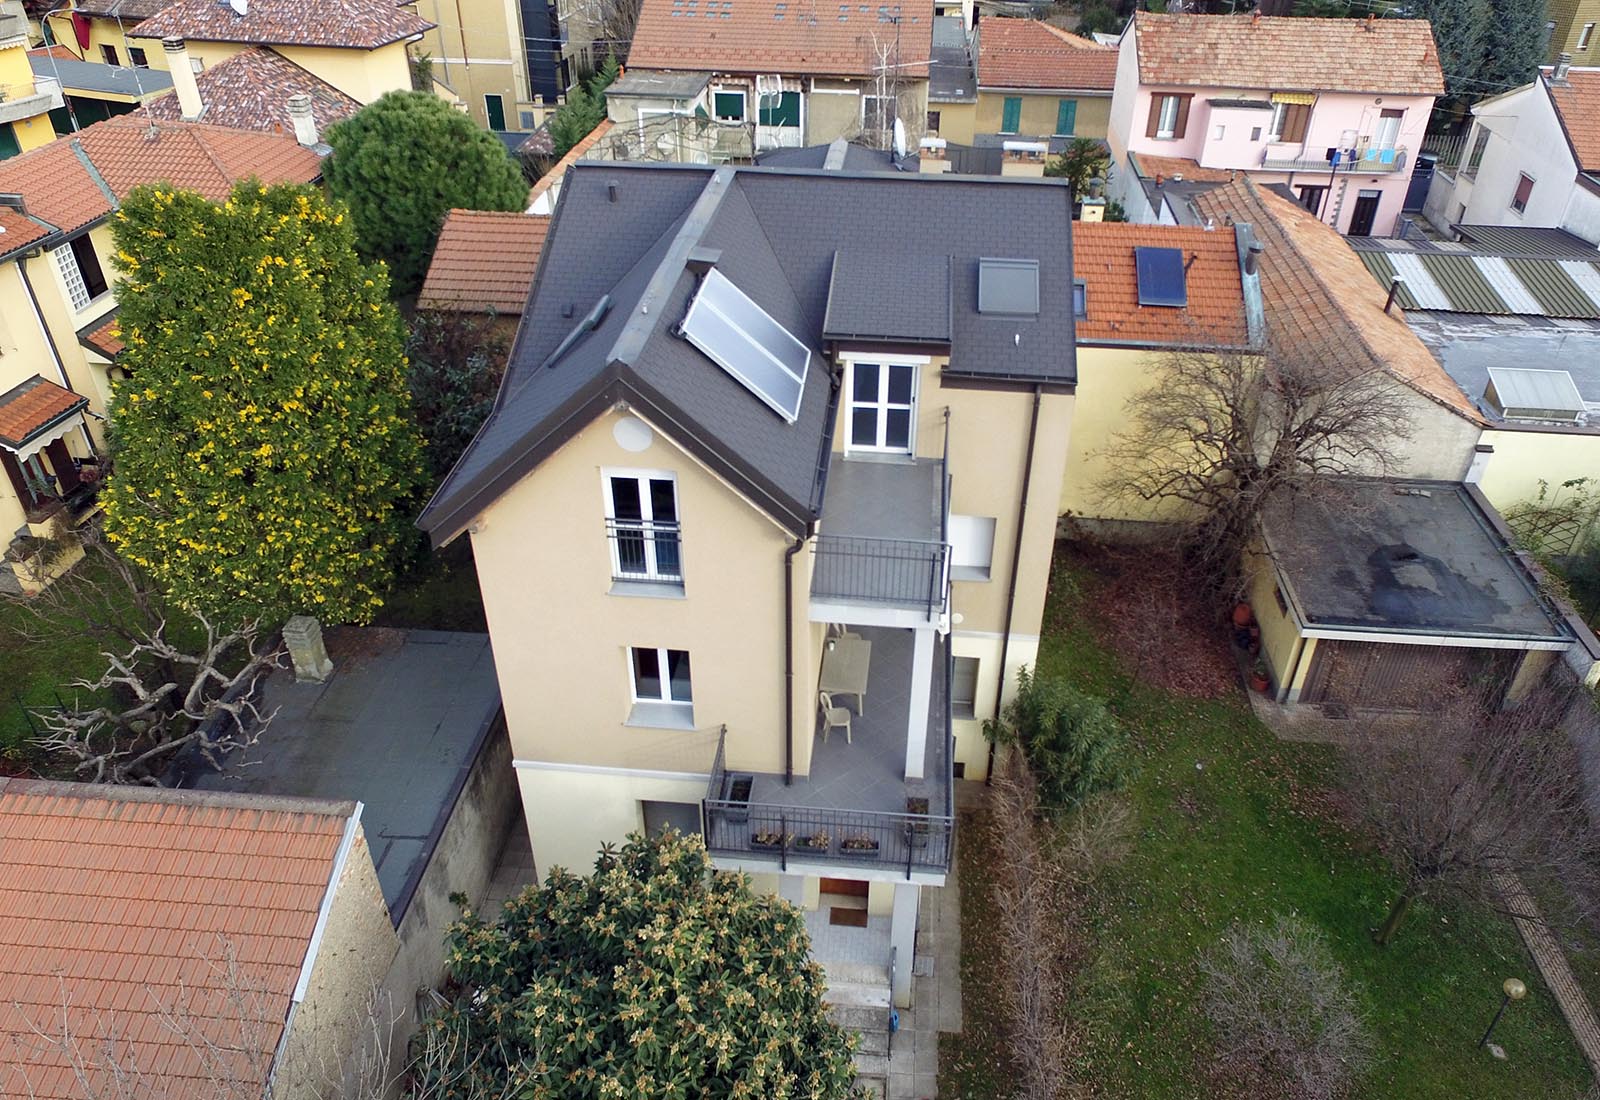 House in dei Mille street in Rho - Aerial view